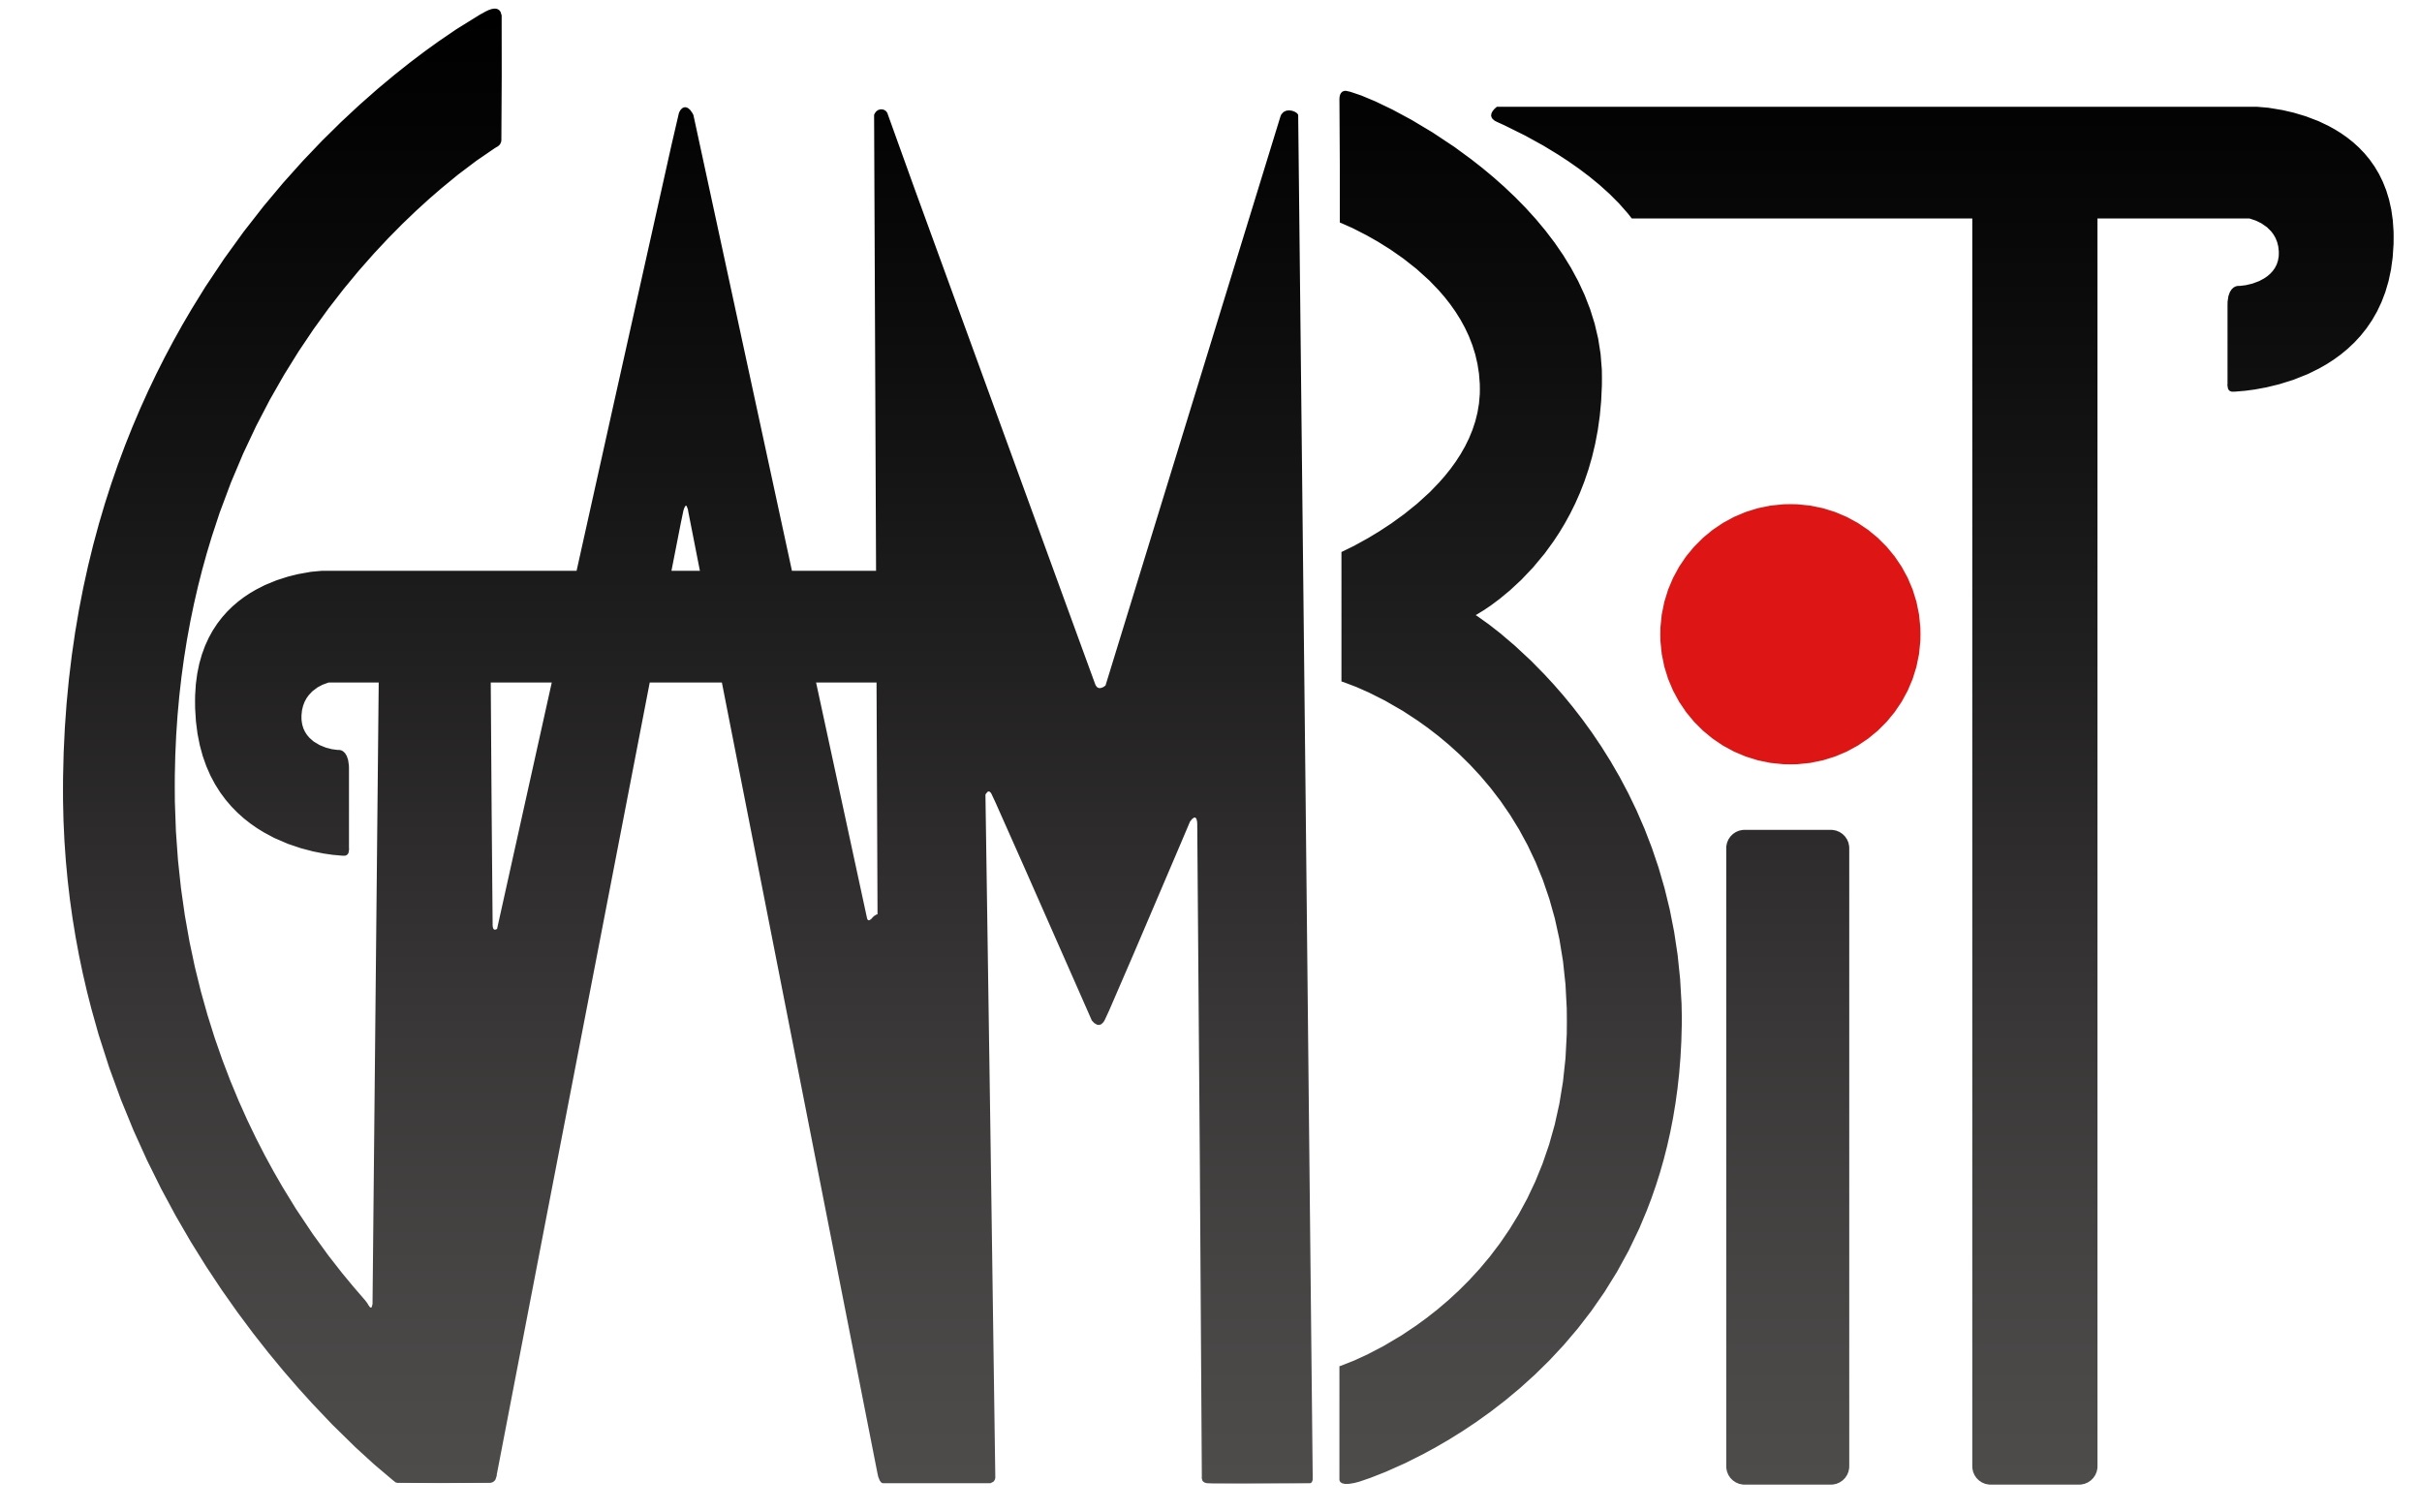 GAMBIT Logo.jpg fbc58d8c07a4b373b5aeadb07e31229b